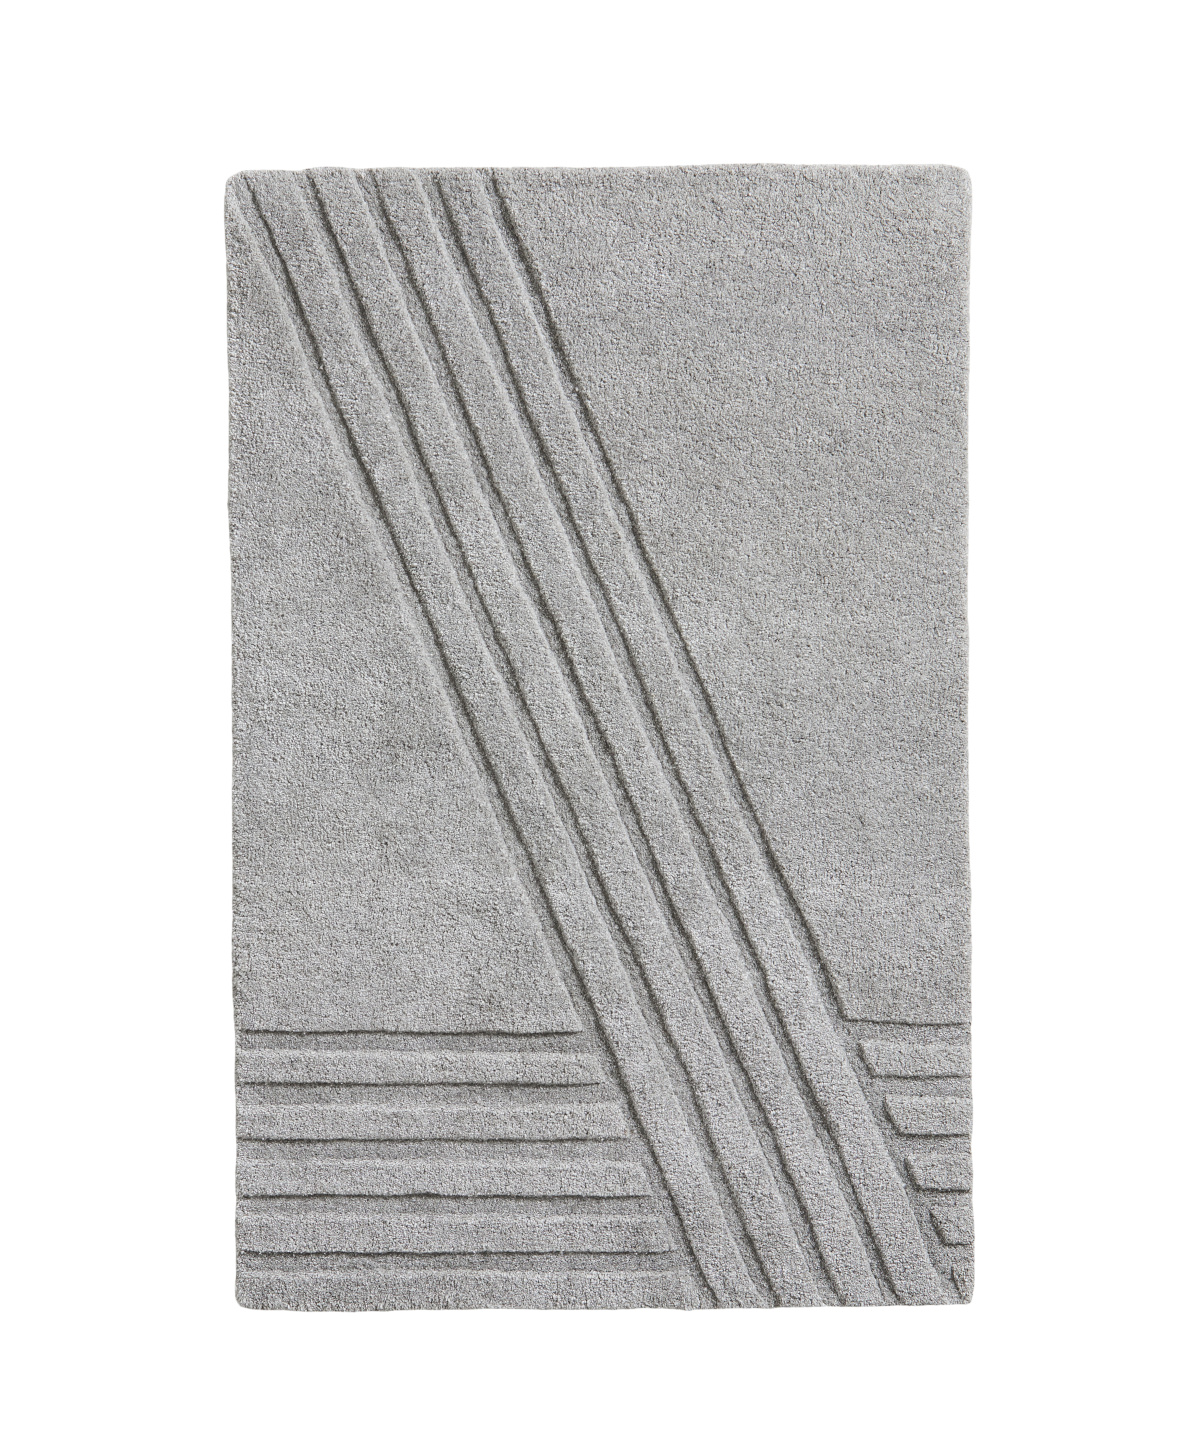 Kyoto Teppich,  200 x 300 cm, grey